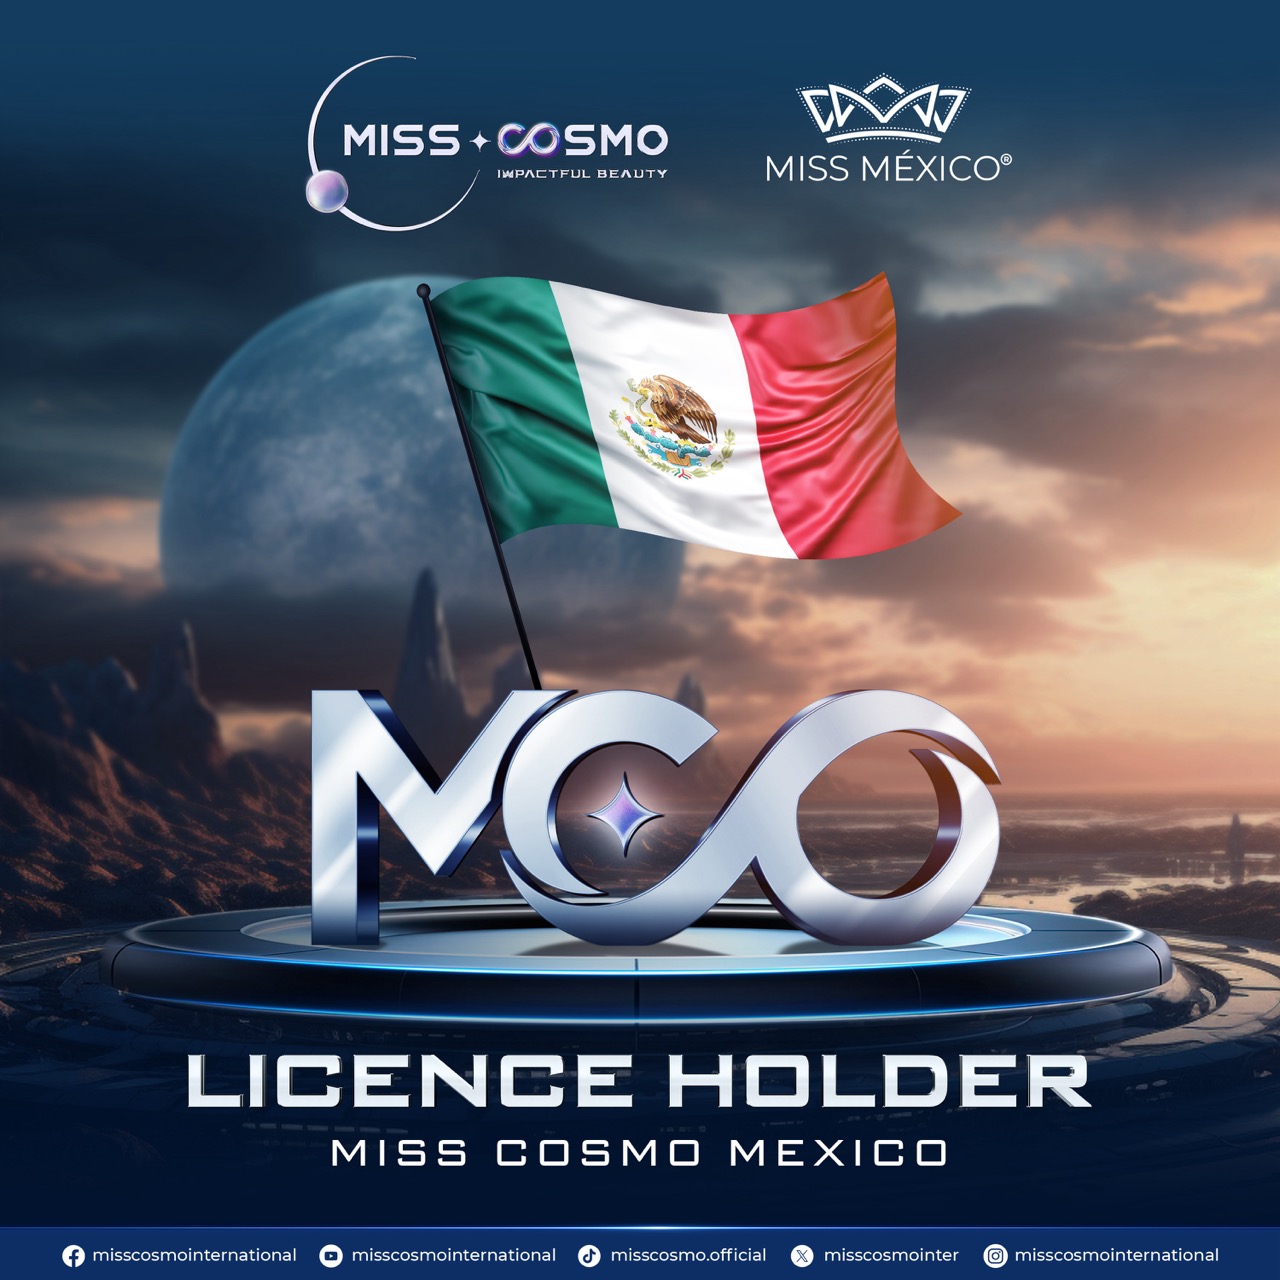 MISSCOSMO_MEXICO lớn